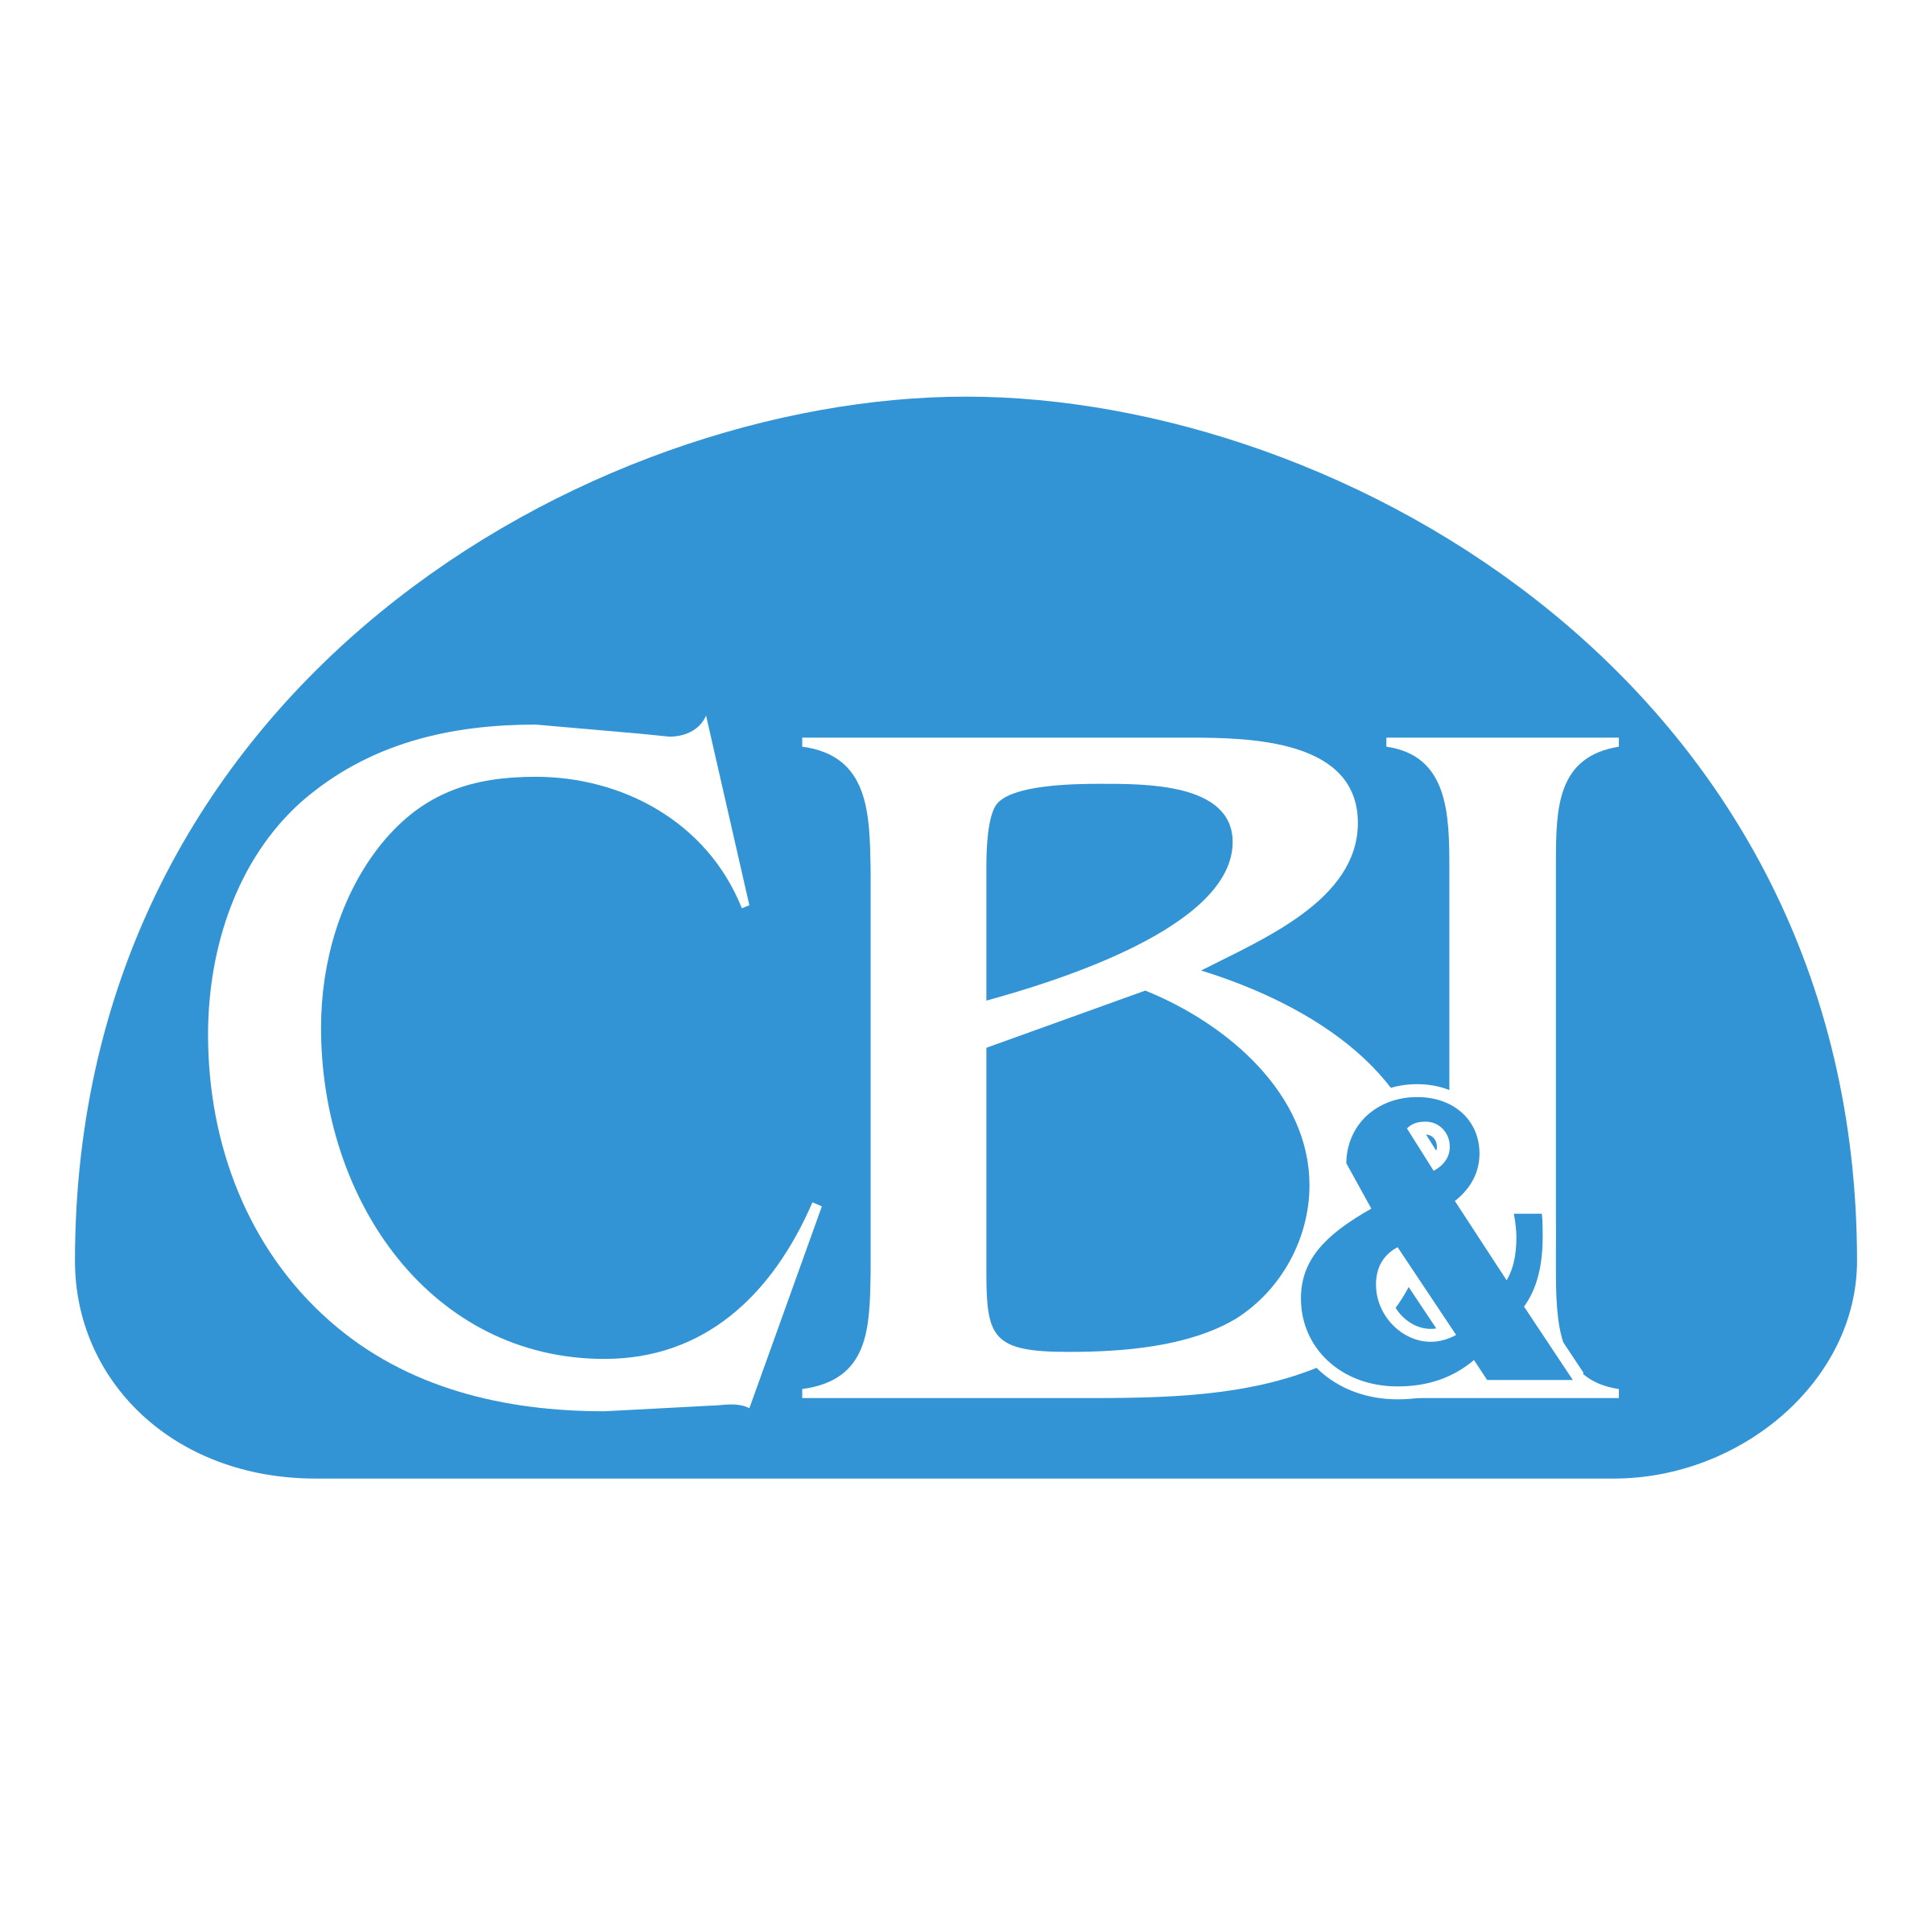 CBI Logo - CBI Logo PNG Transparent & SVG Vector - Freebie Supply